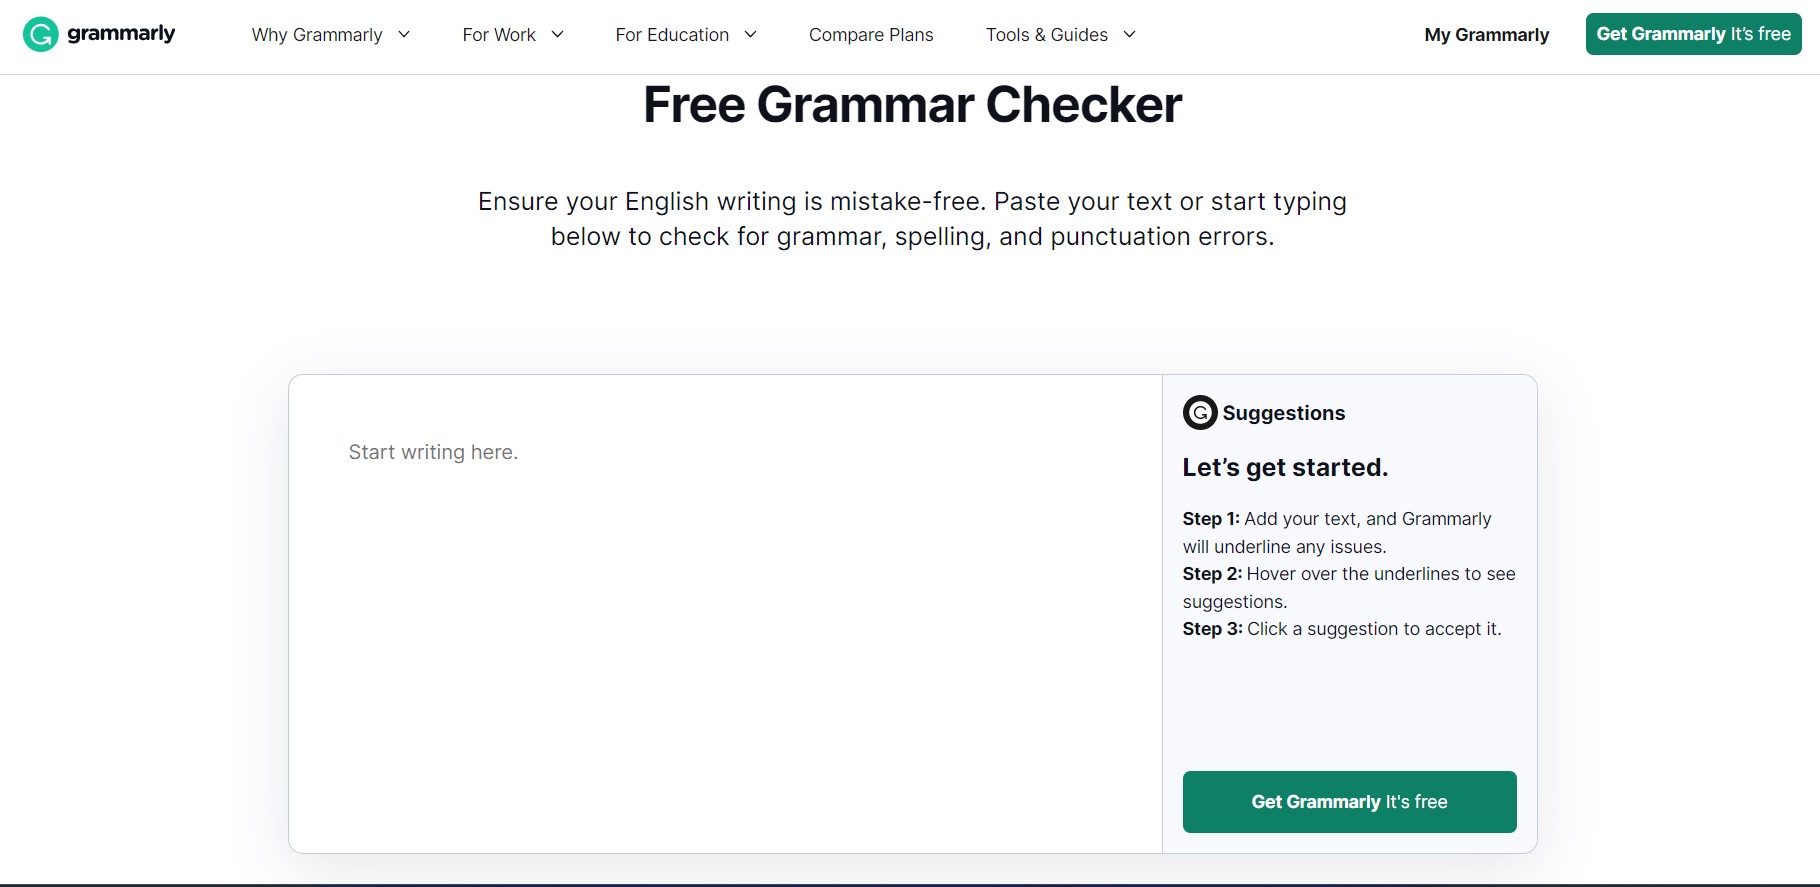 grammarly grammar checker review